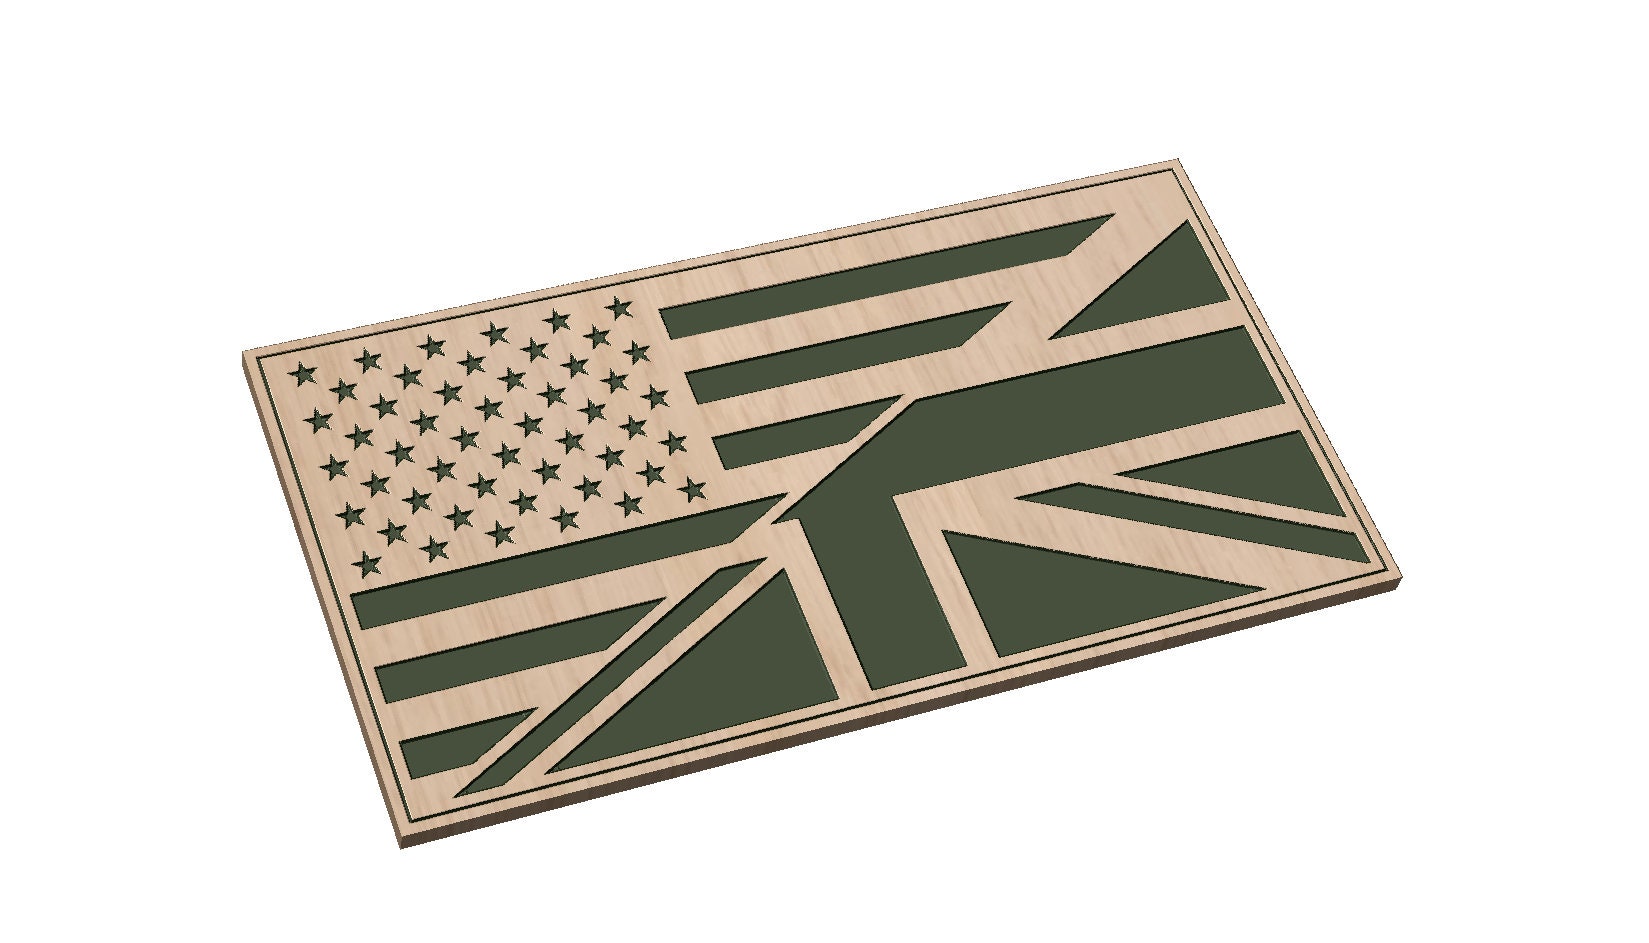 Rustic American Flag Stencil Design - SVG FILE ONLY – stencibelle